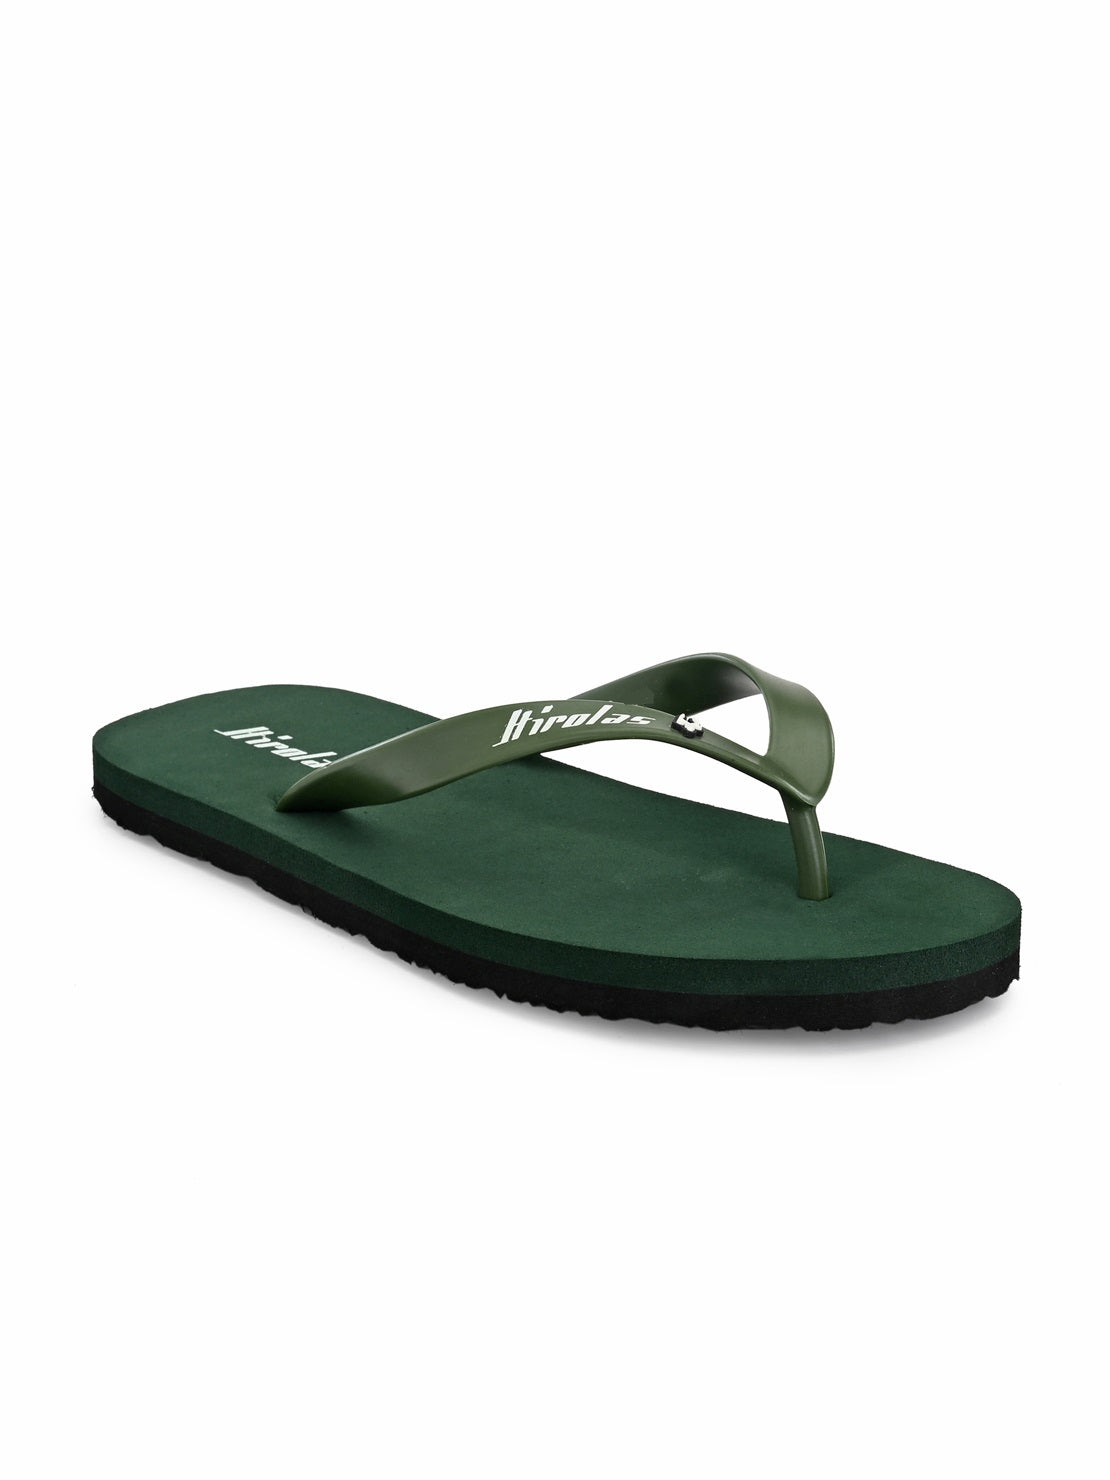 Hirolas® Men's Solid Green EVA Thong Flip-Flops (HROFF08GRN)